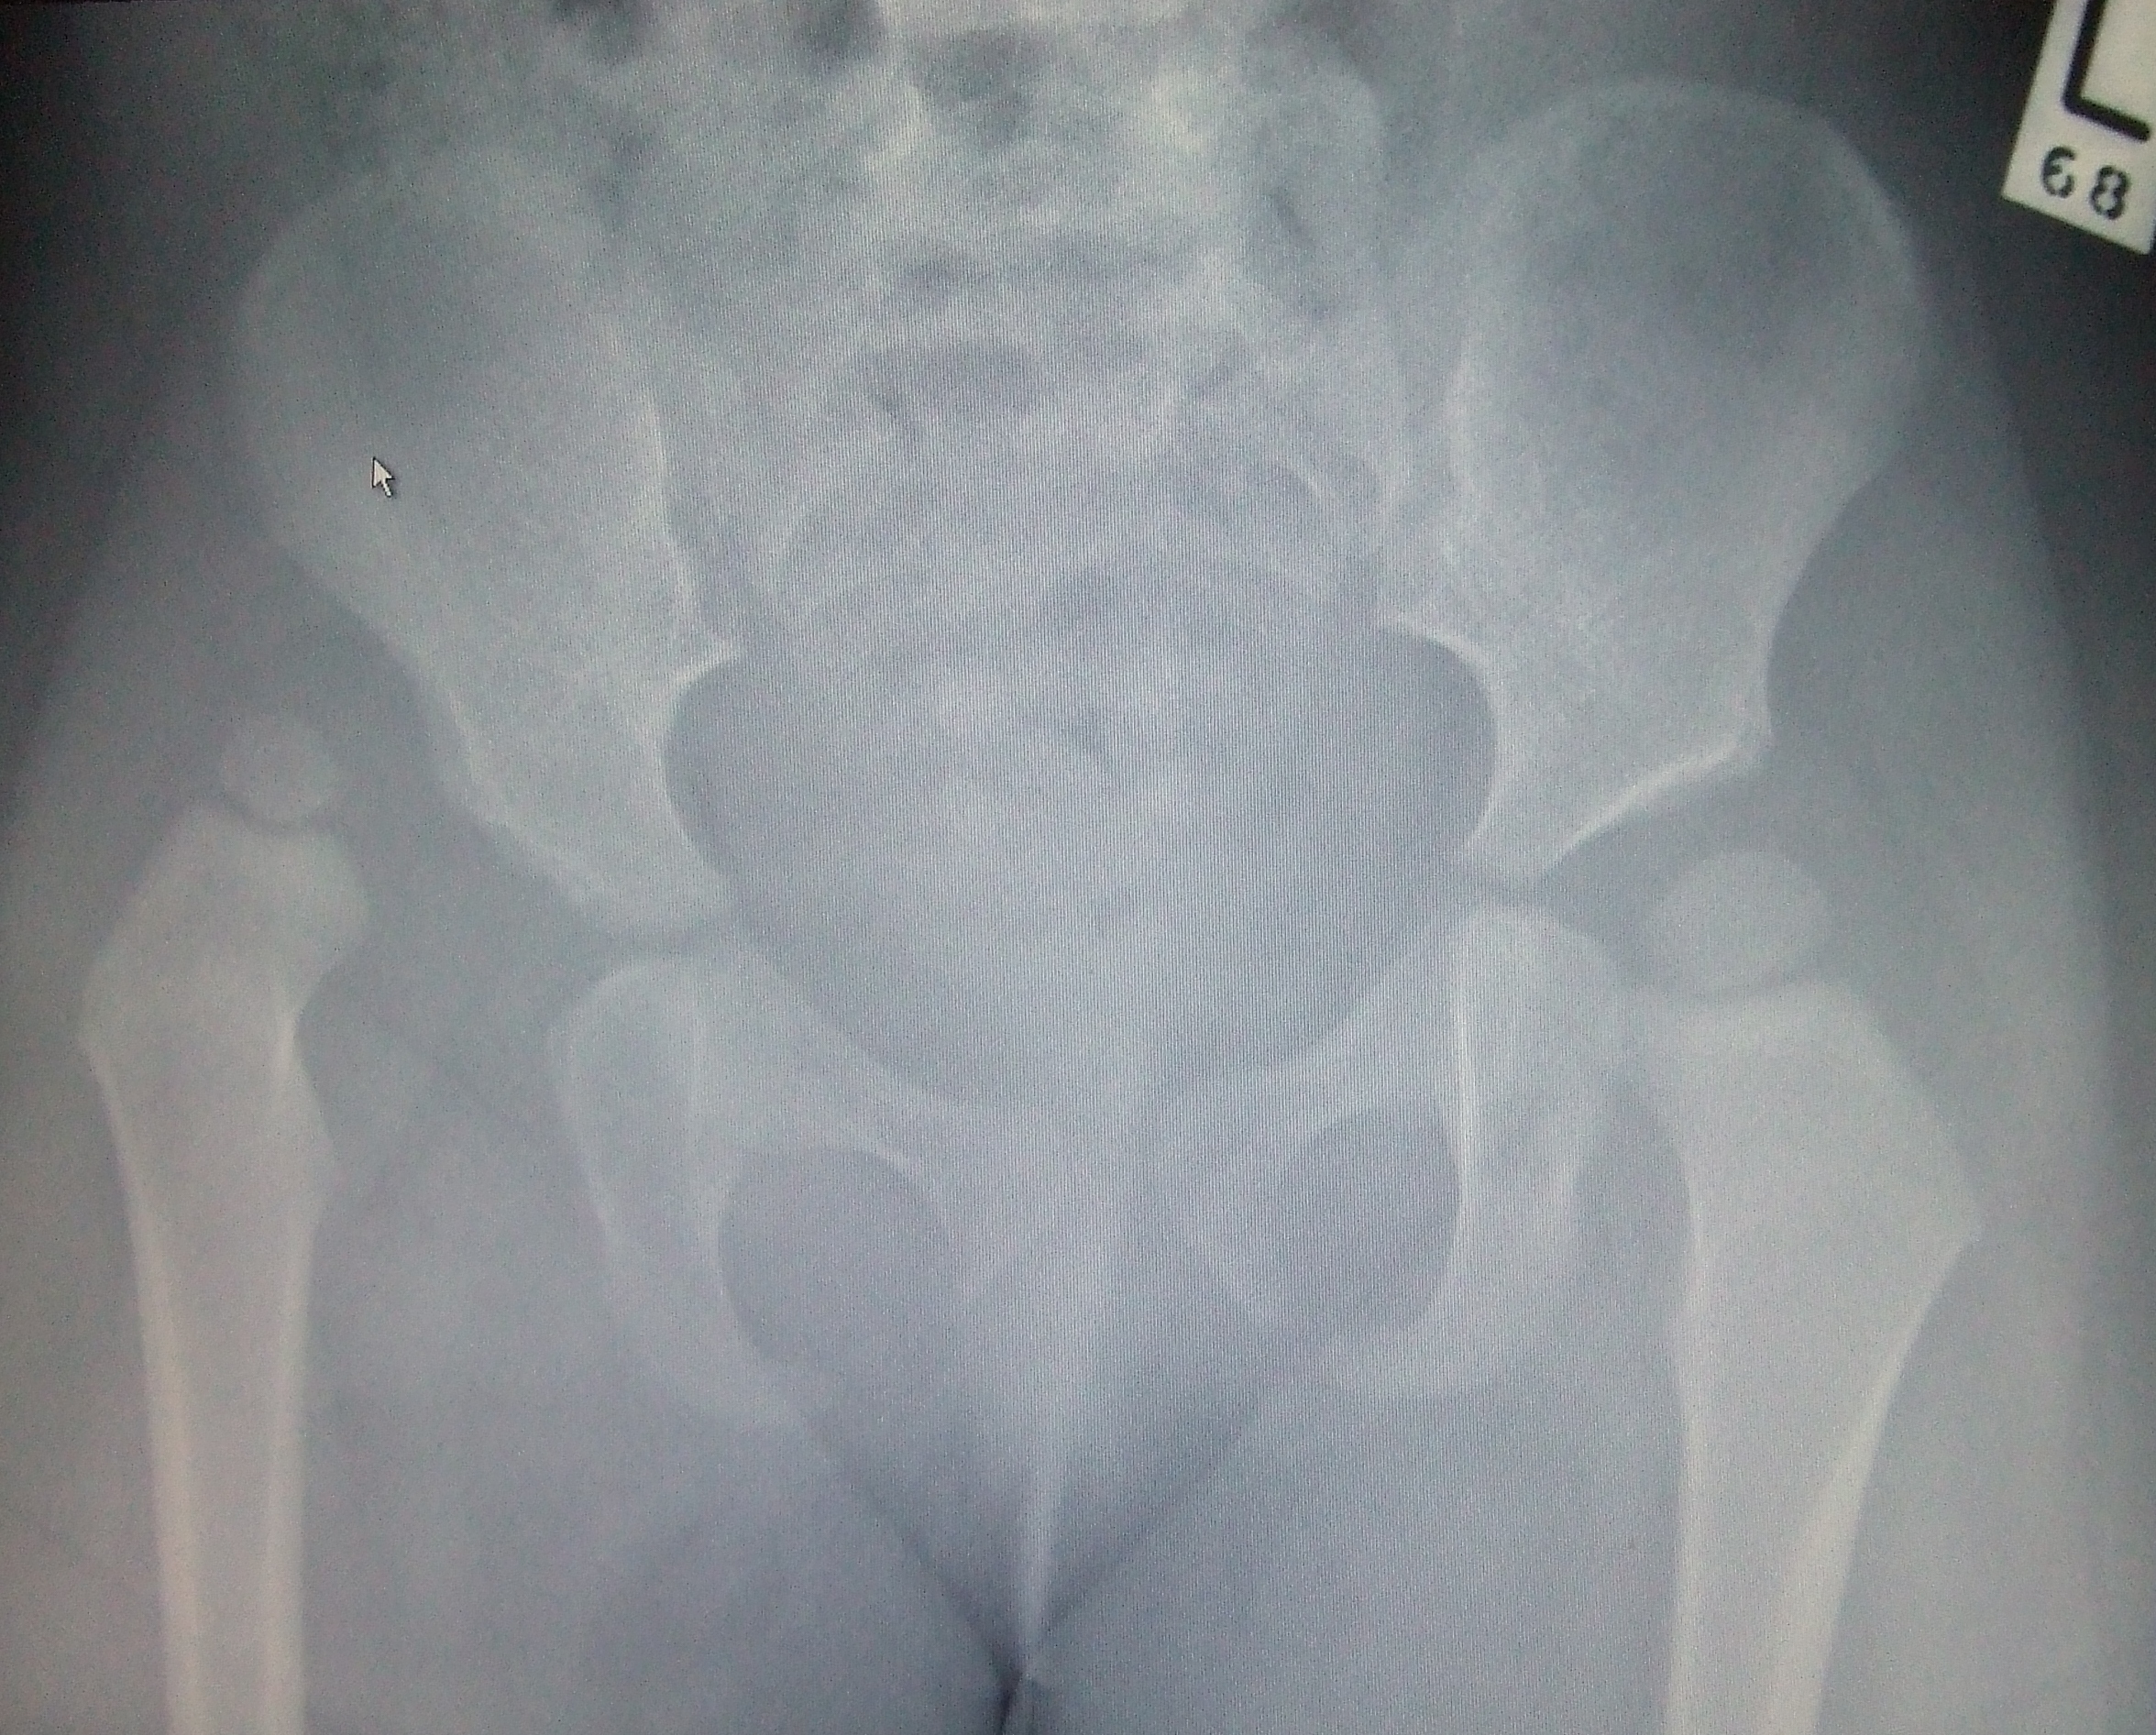 File:Dislocated hip.jpg